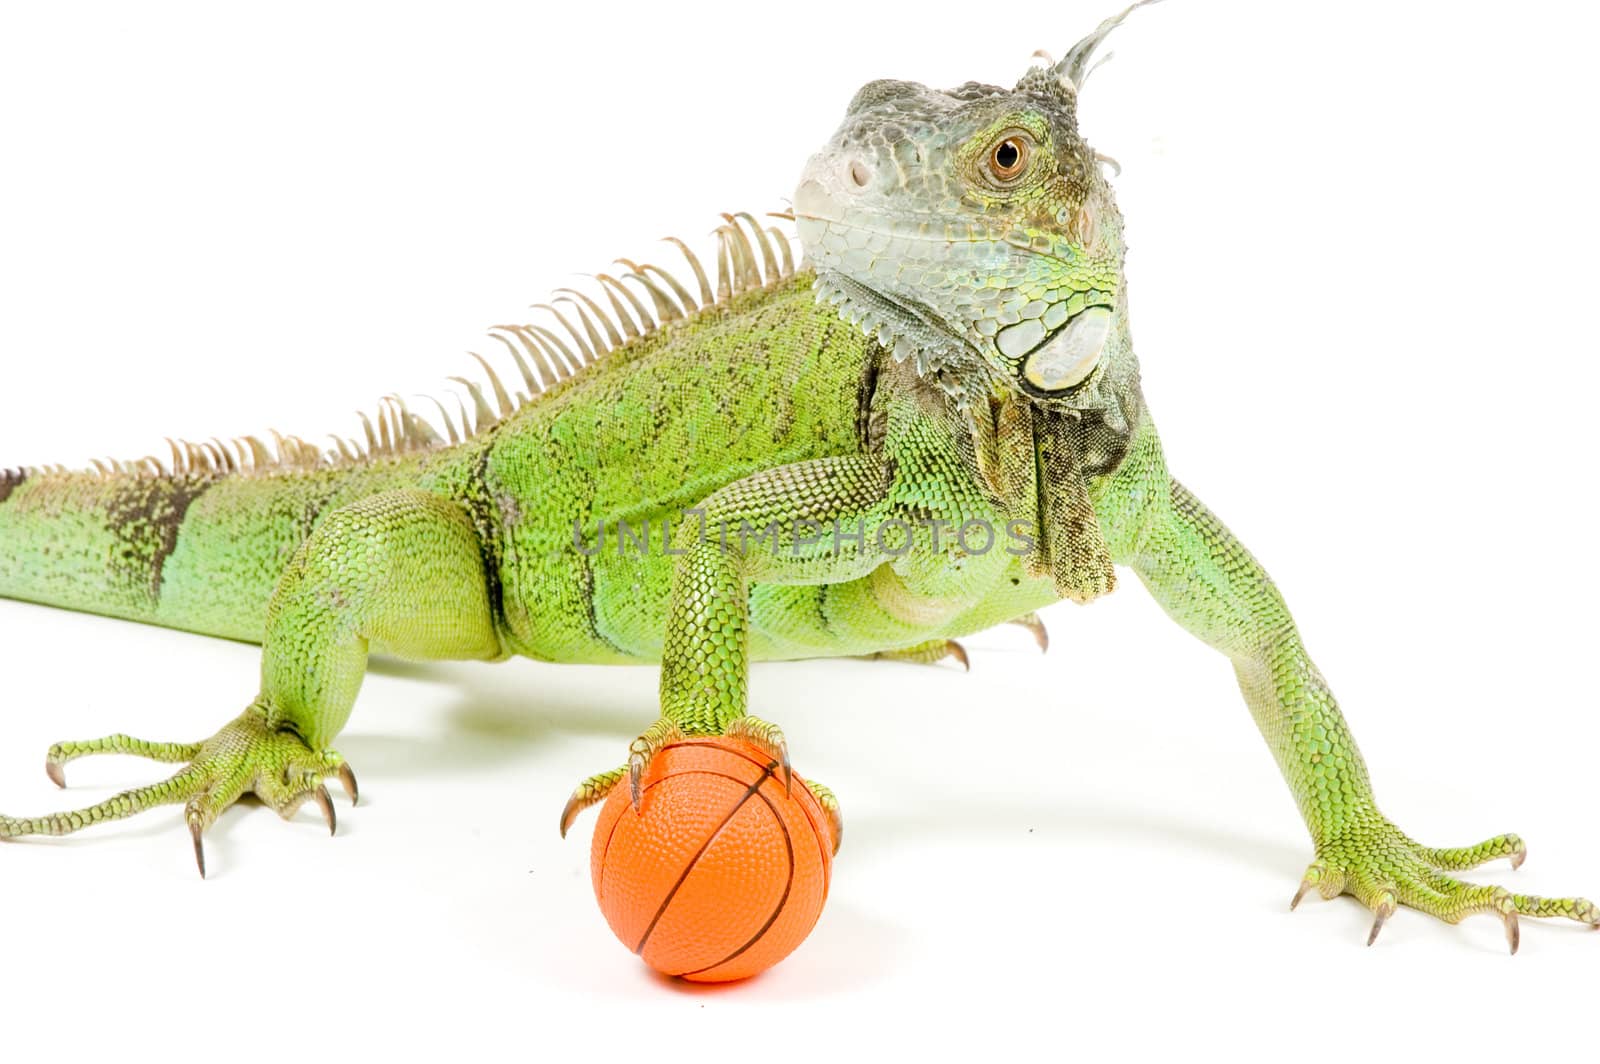 iguana holding a basketball by ladyminnie